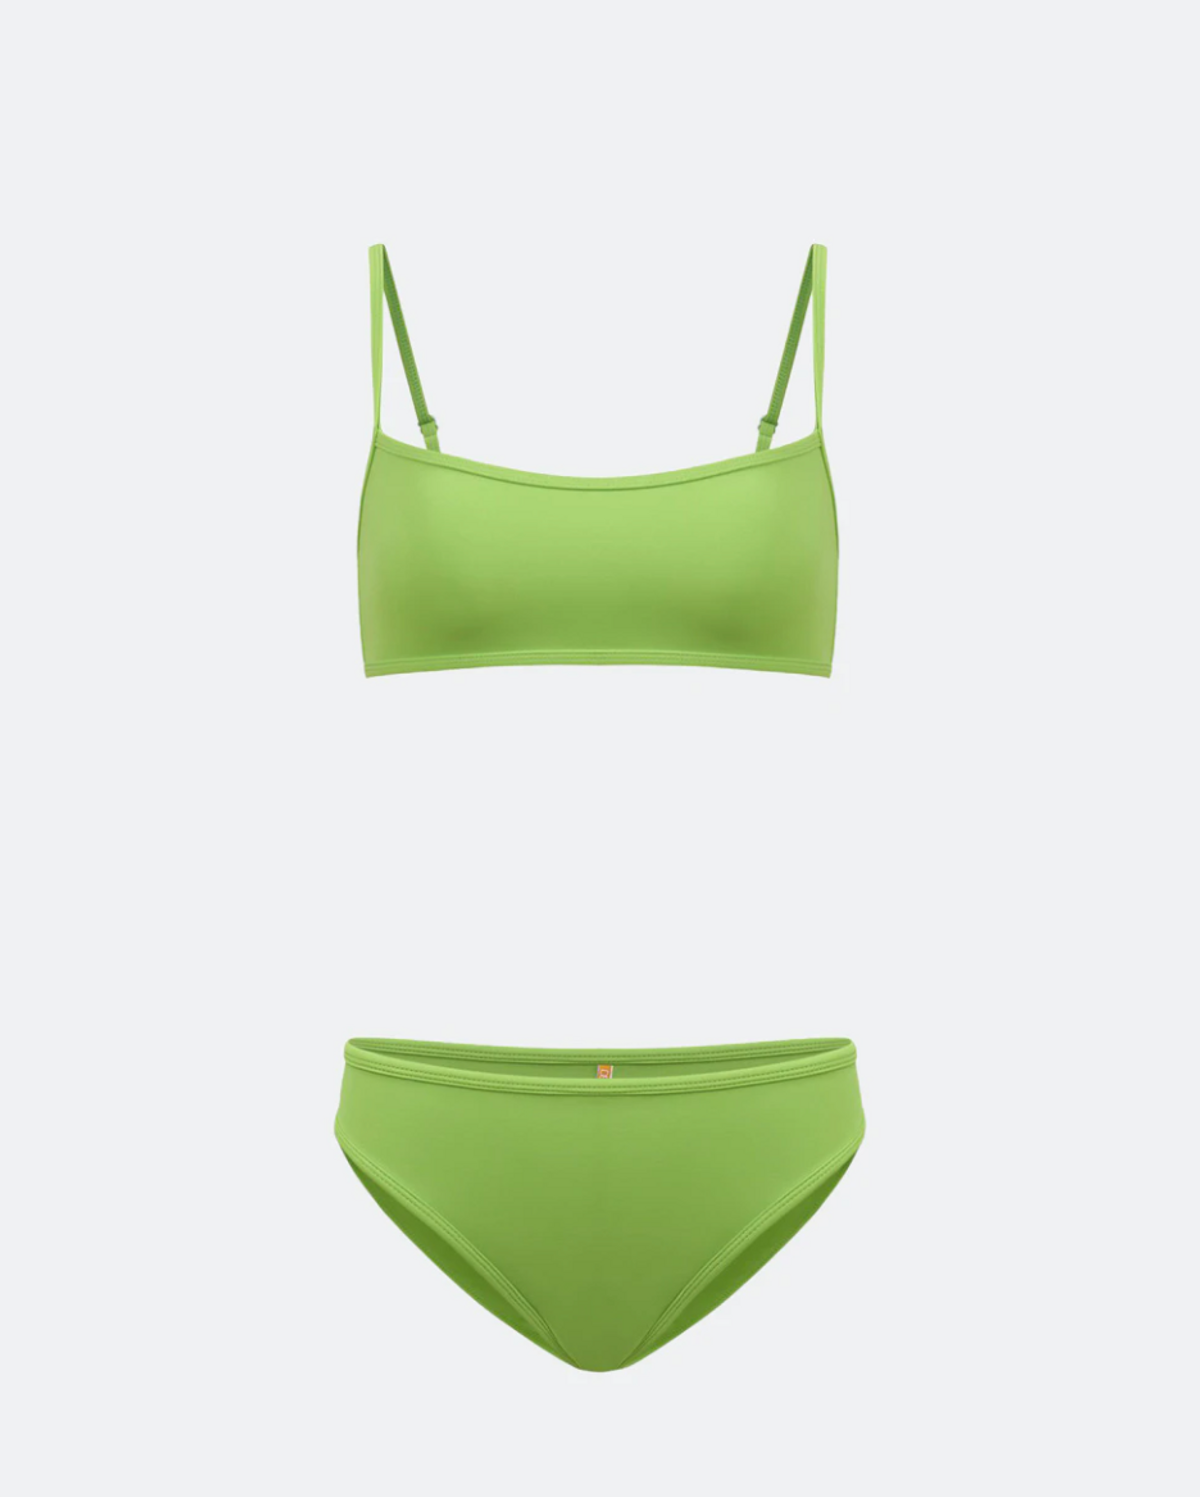 Symi Bikini Top in Bolt Green